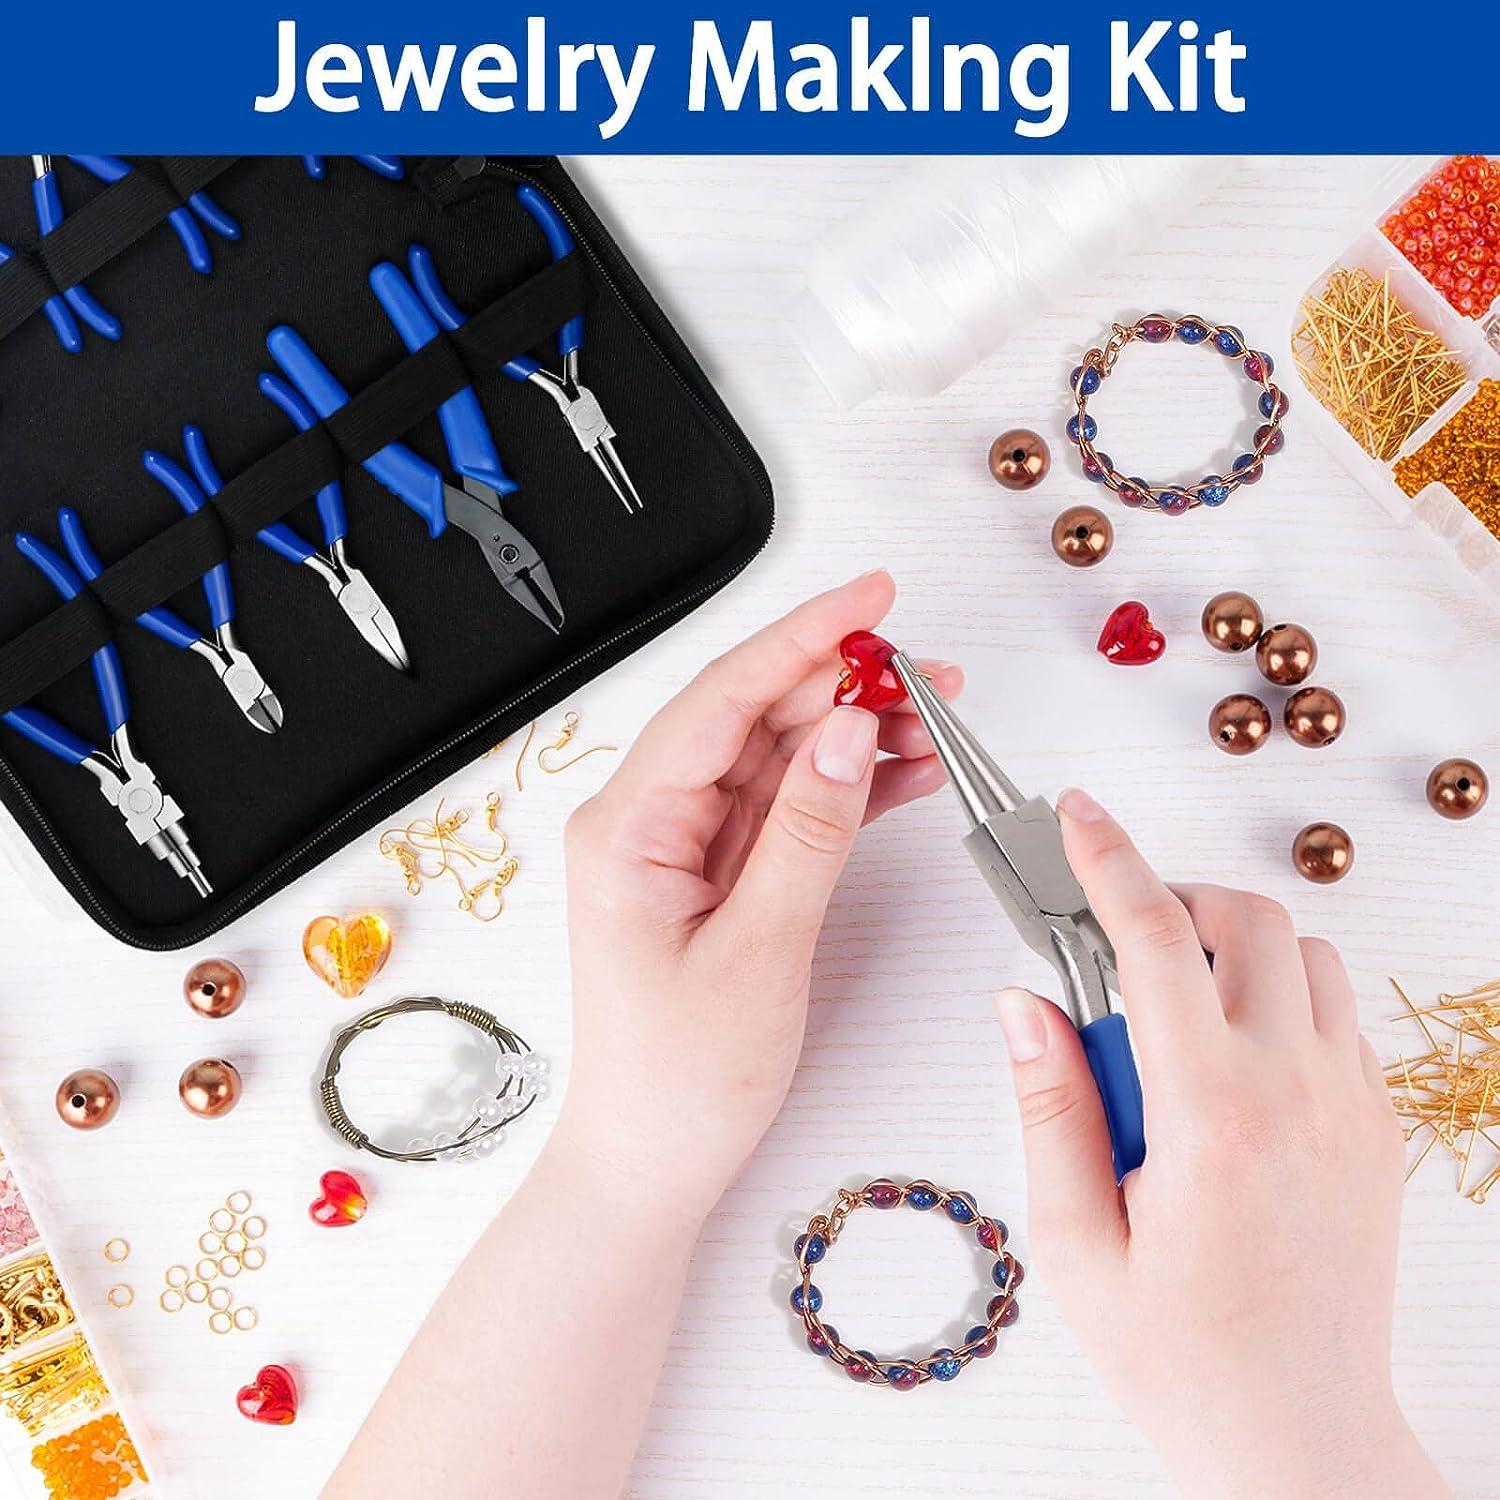 Pliers for Jewelry Making, Shynek Jewelry Pliers Set Includes